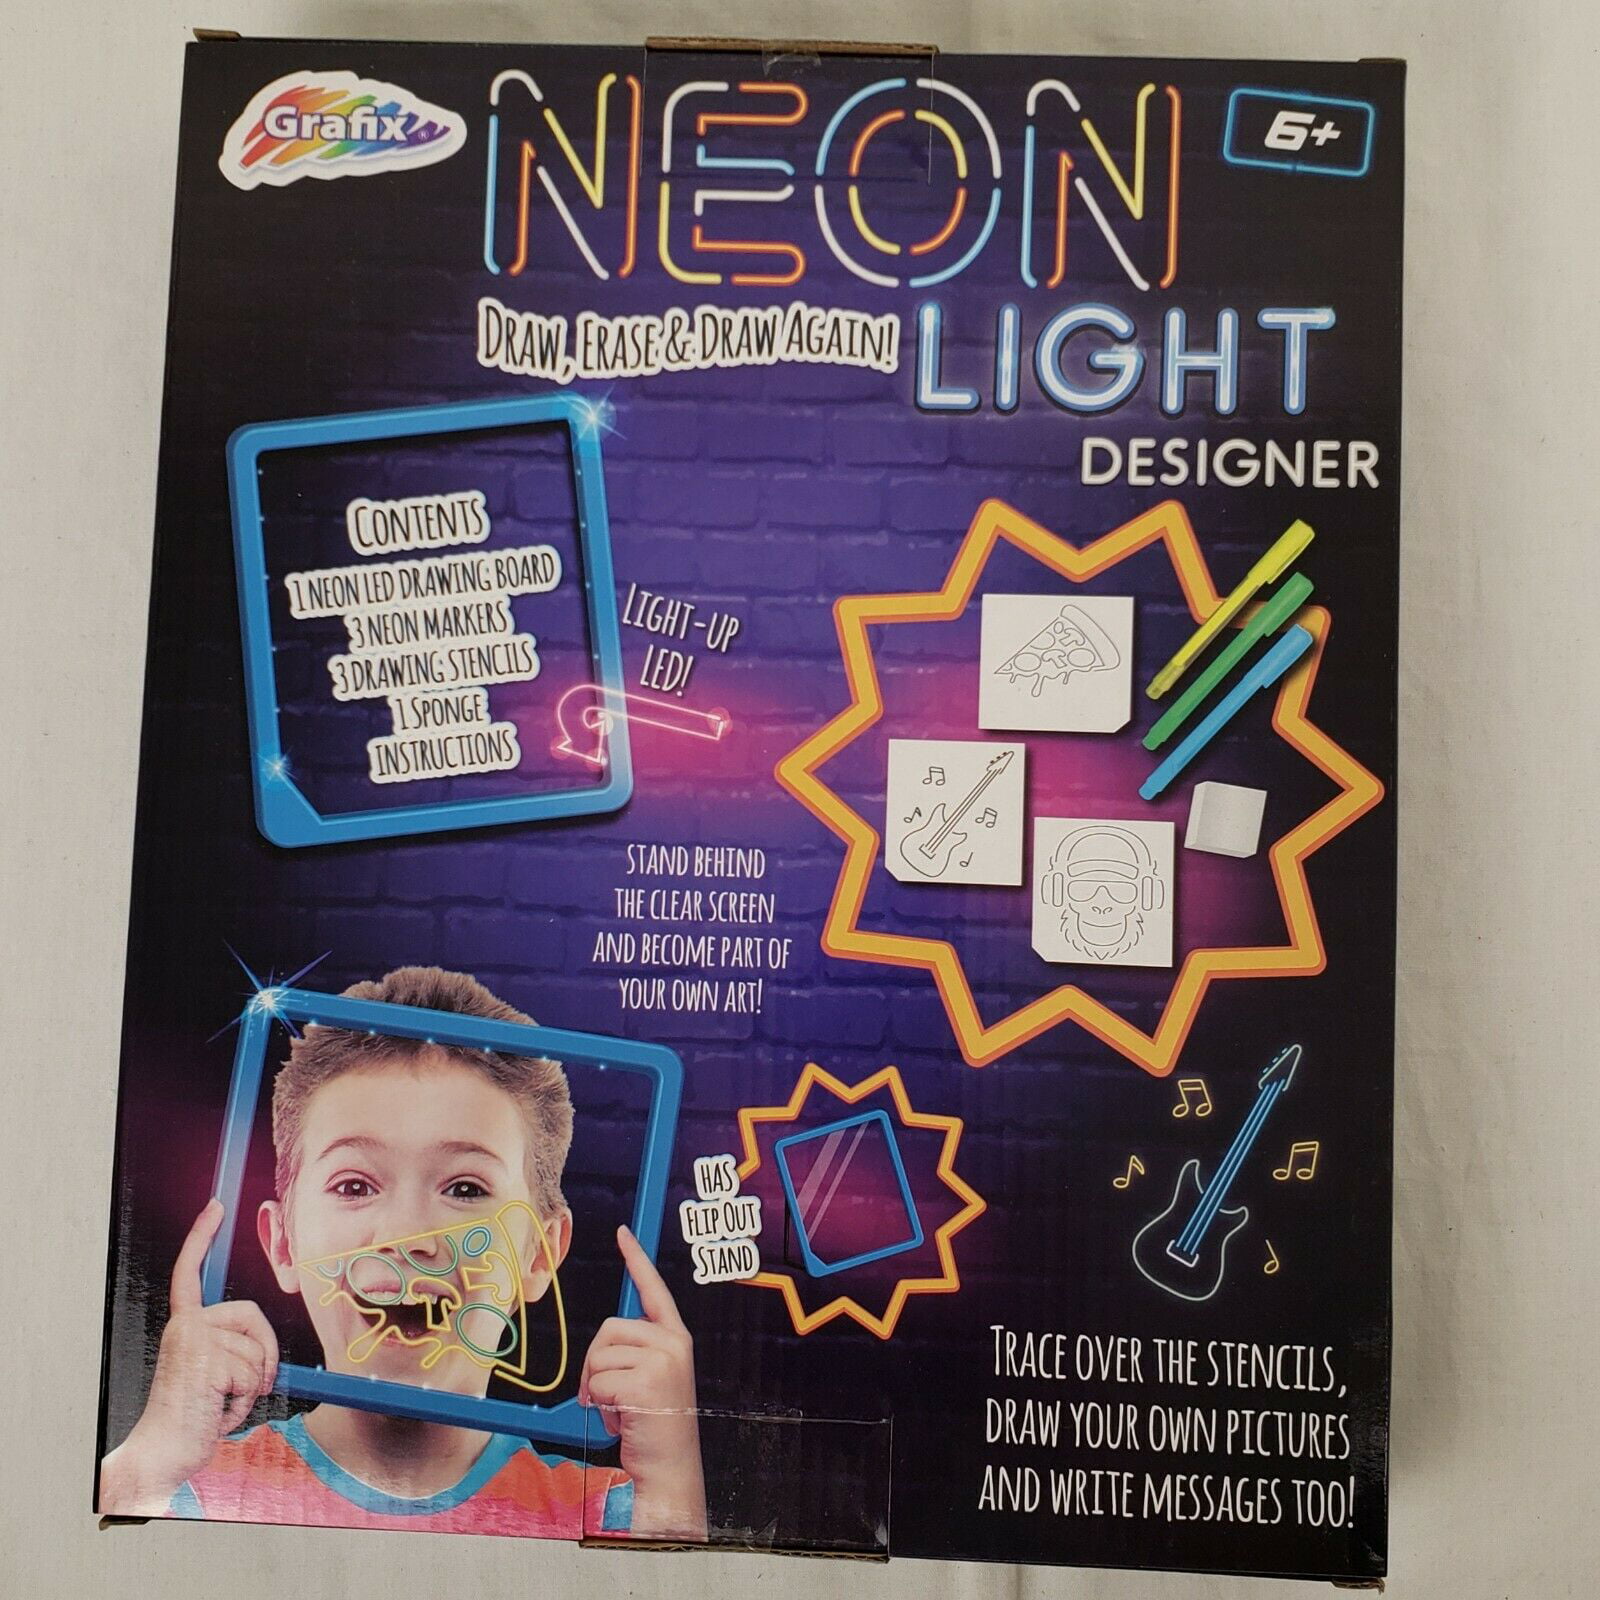 Grafix Neon LED Light Designer Blue Drawing Board. Draw, Erase